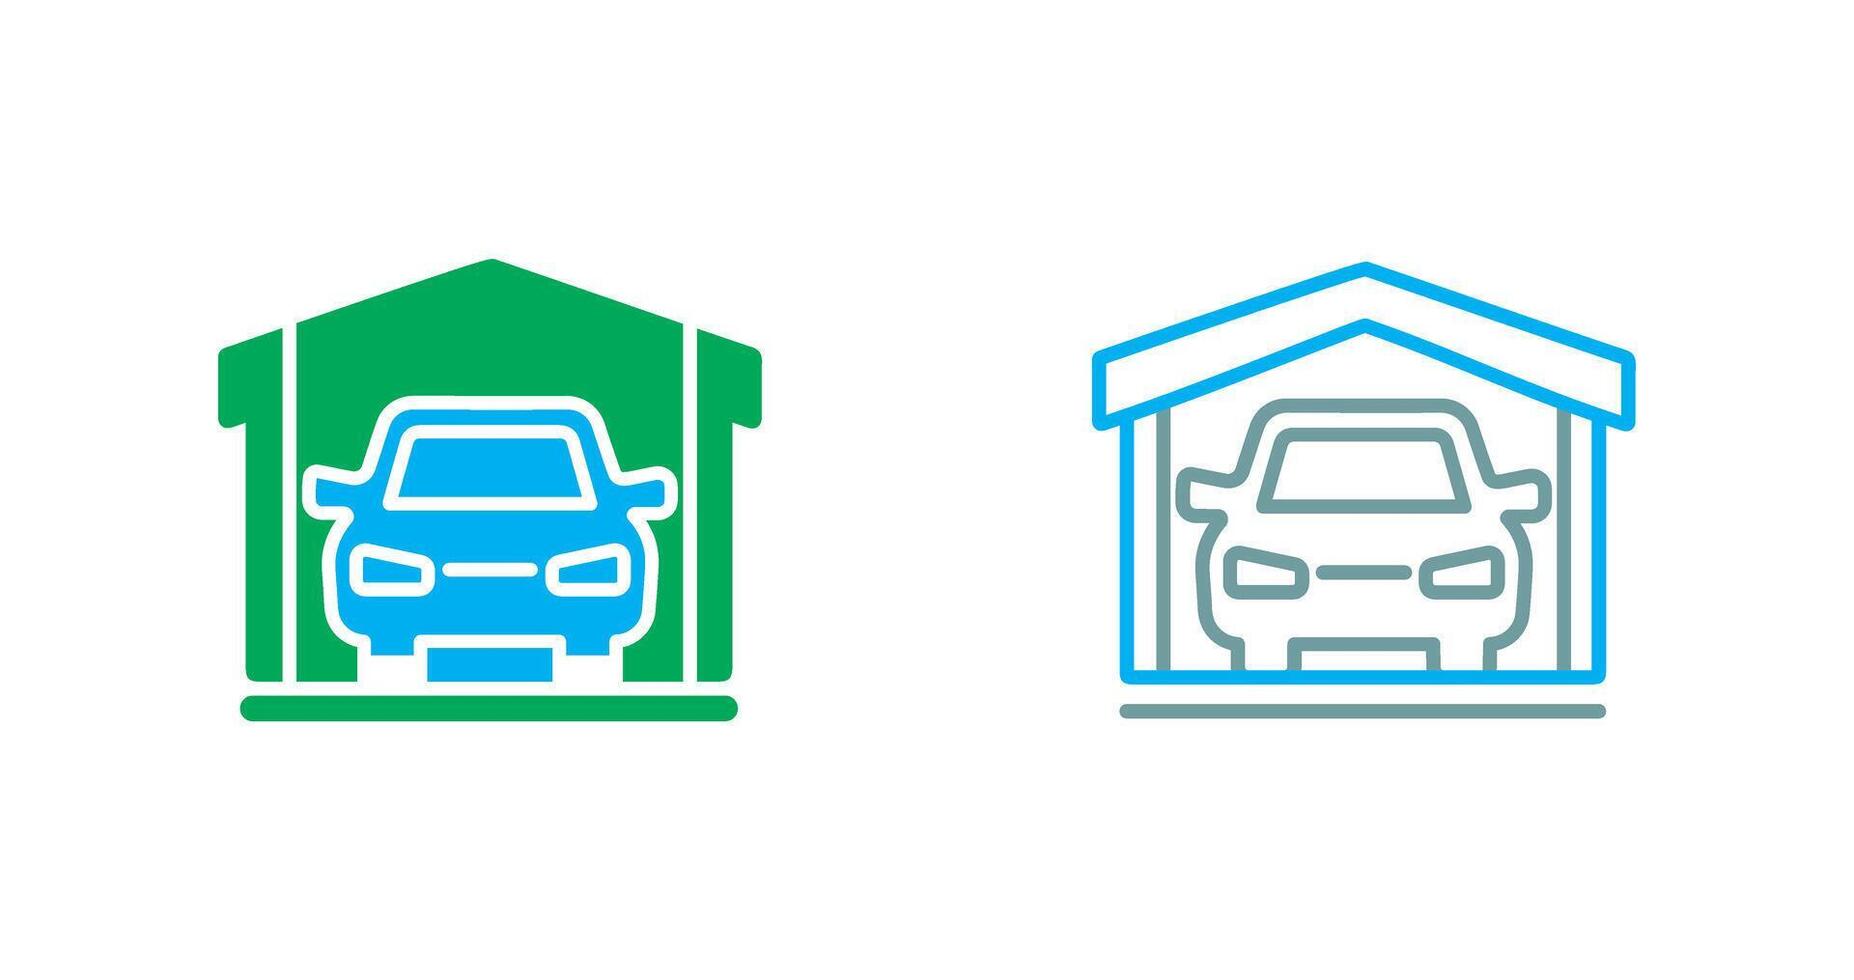 Garage Icon Design vector